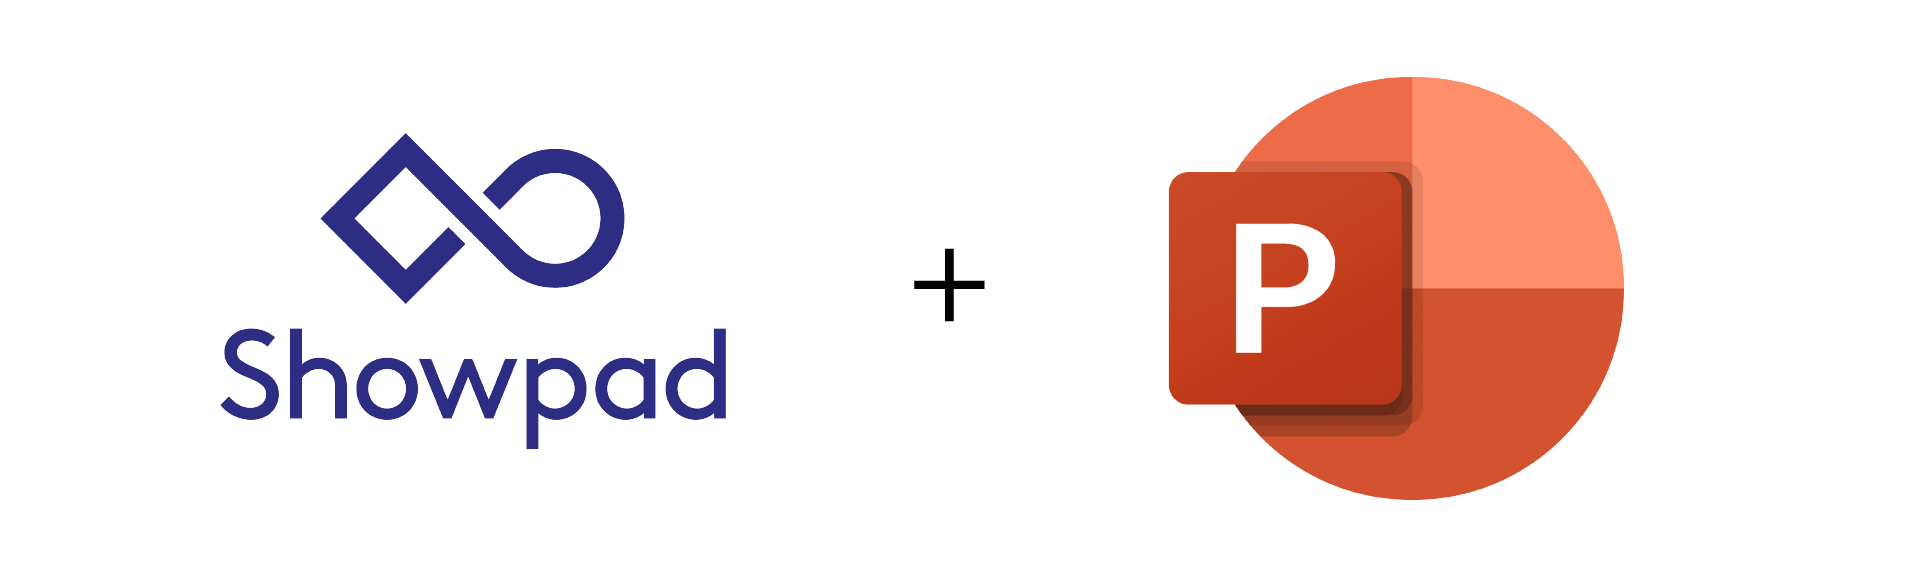 showpad logo, plus sign, powerpoint logo